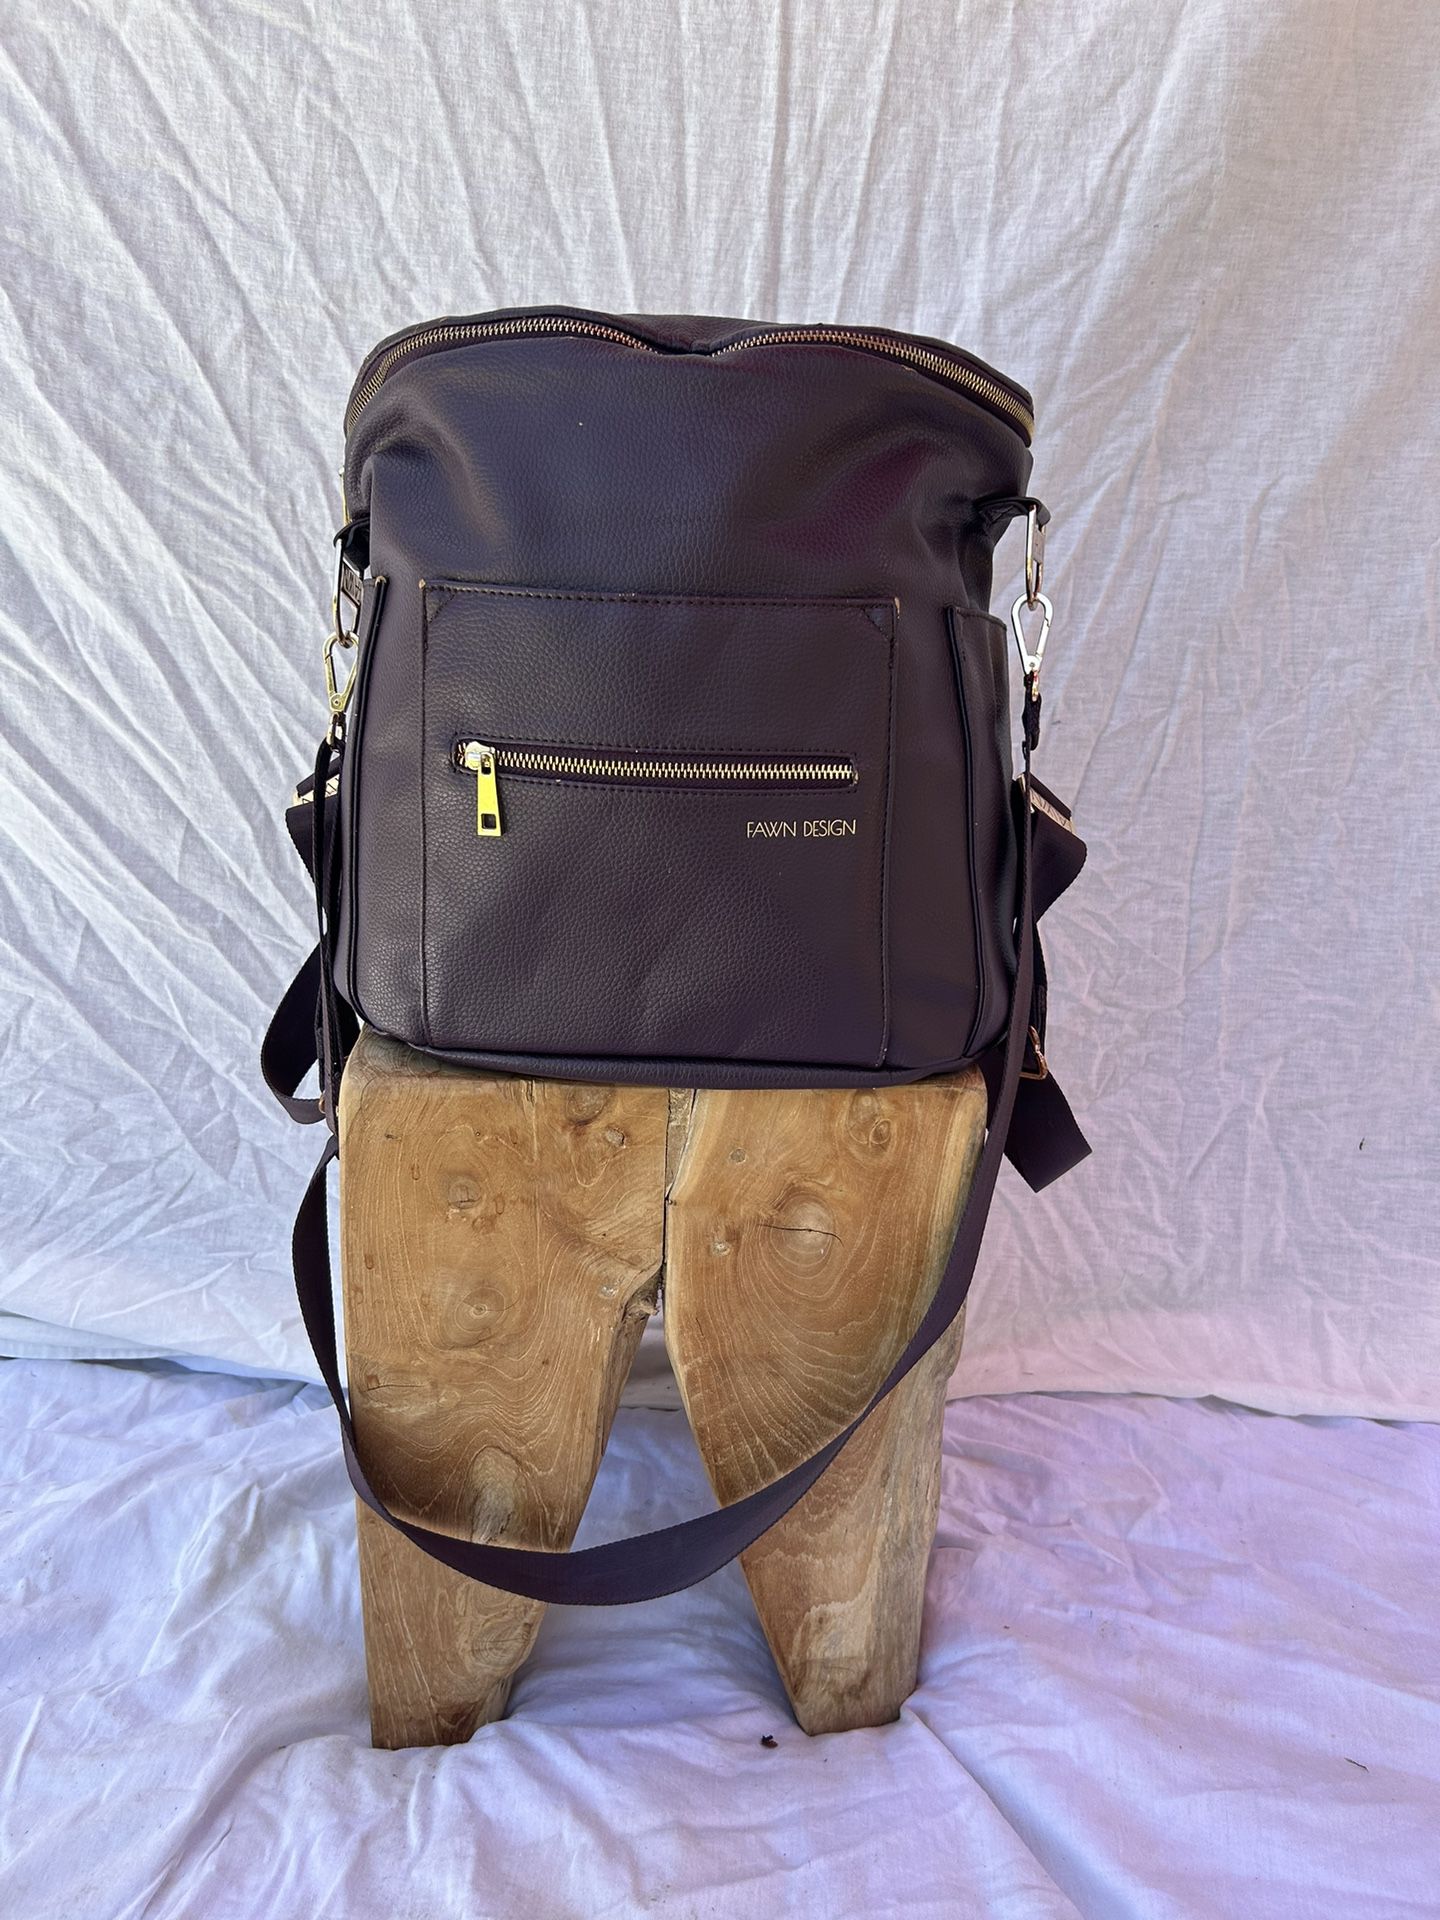 Fawn Design The Original Large Backpack Messenger Diaper Bag Gray